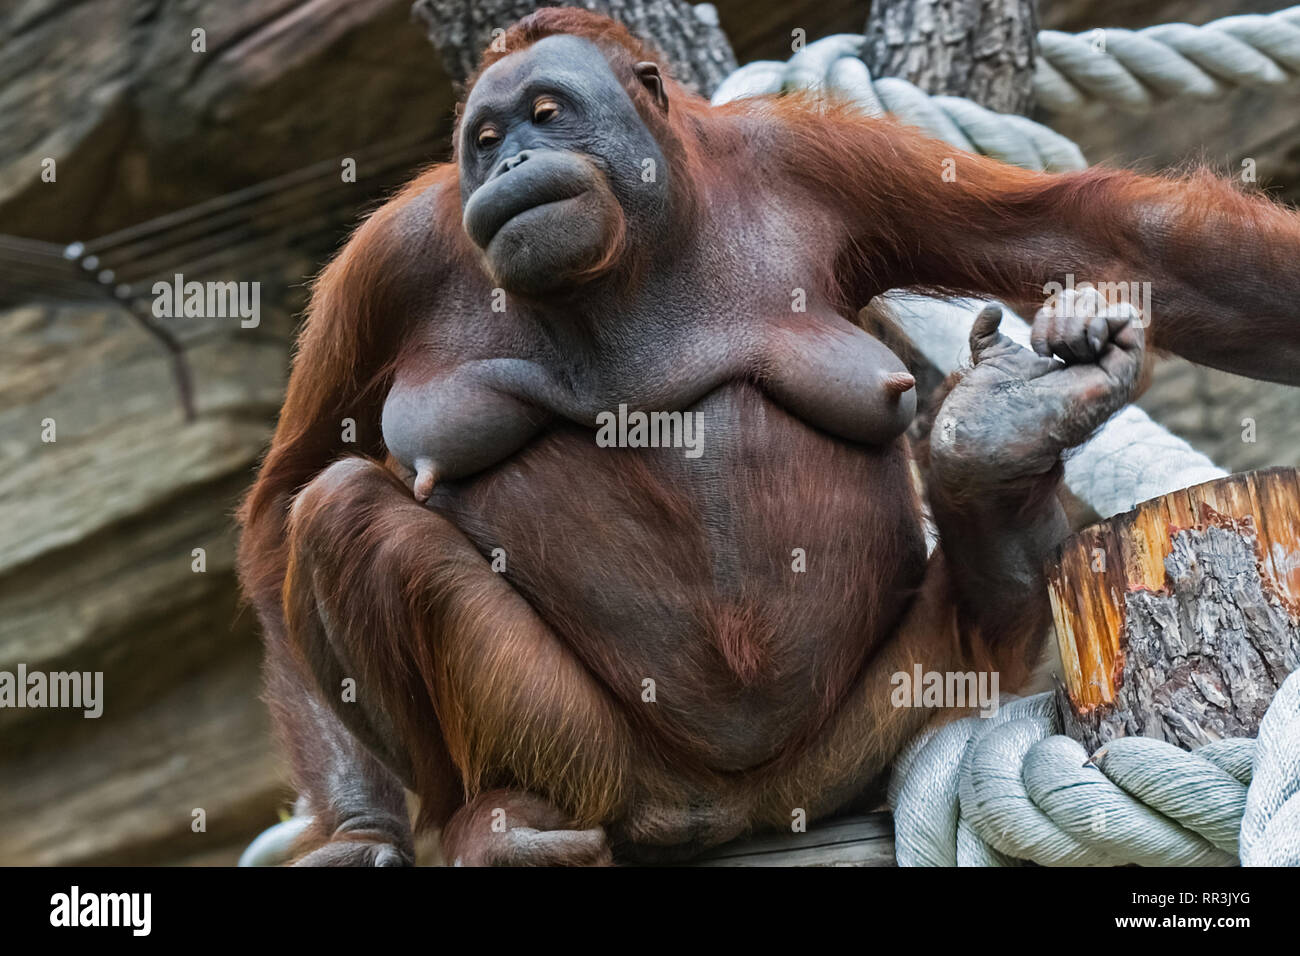 Red headed the monkey orangutan Stock Photo - Alamy